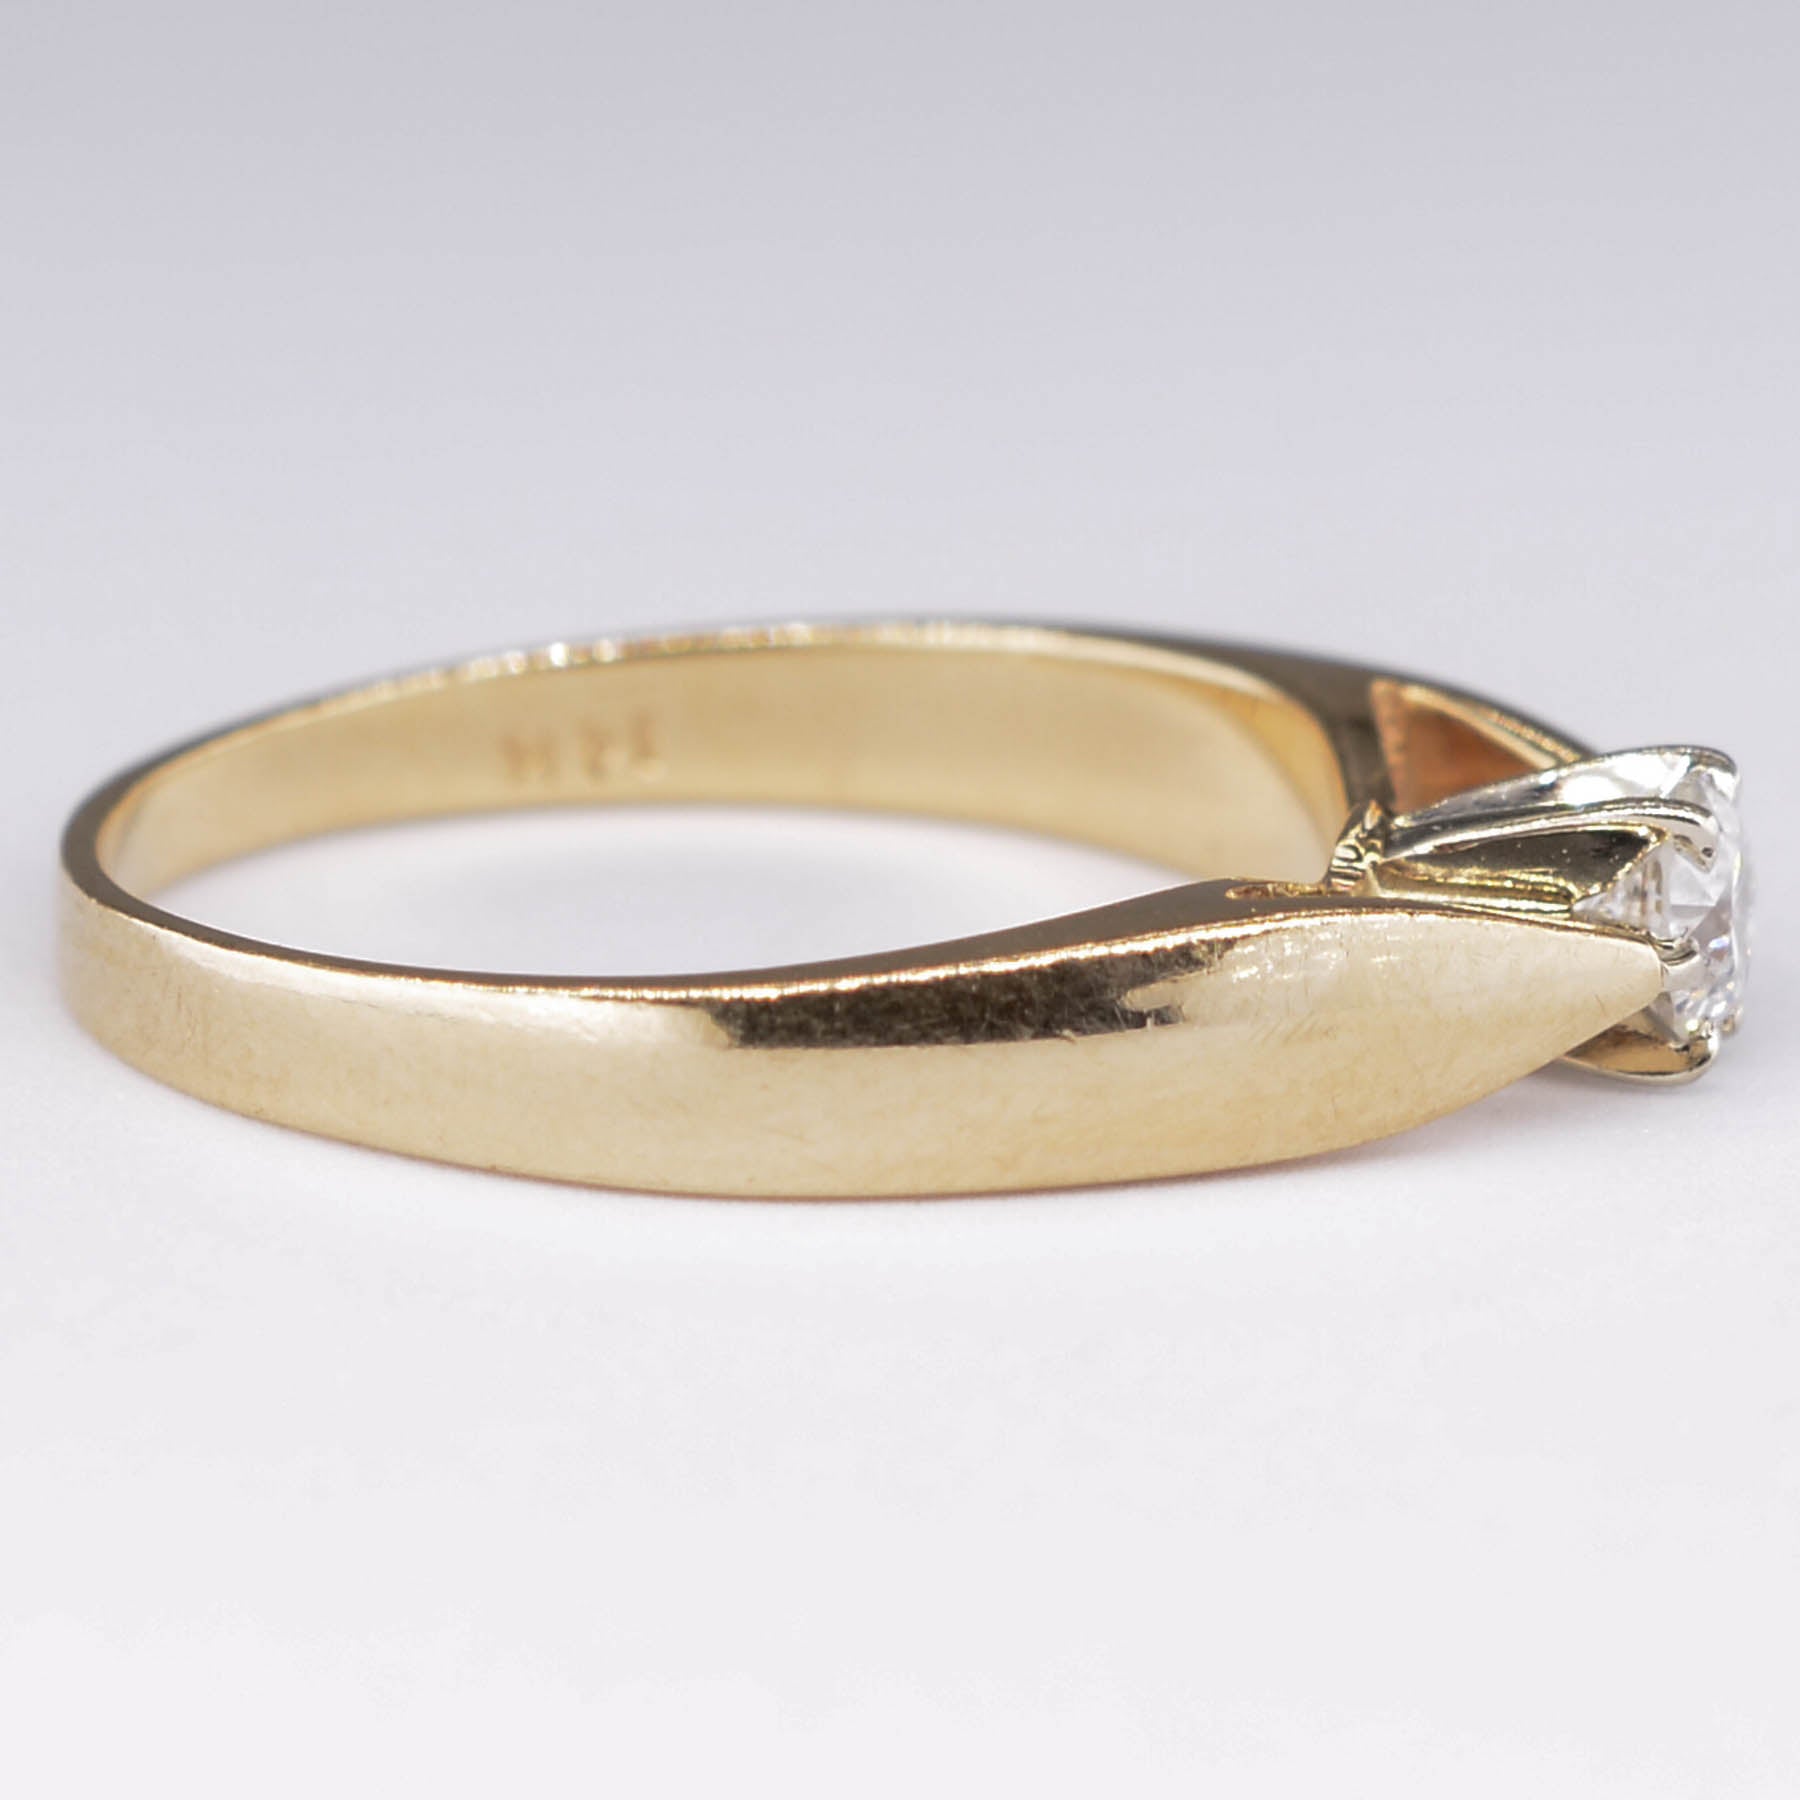 14k Solitaire Diamond Ring | 0.16ct | SZ 5 |